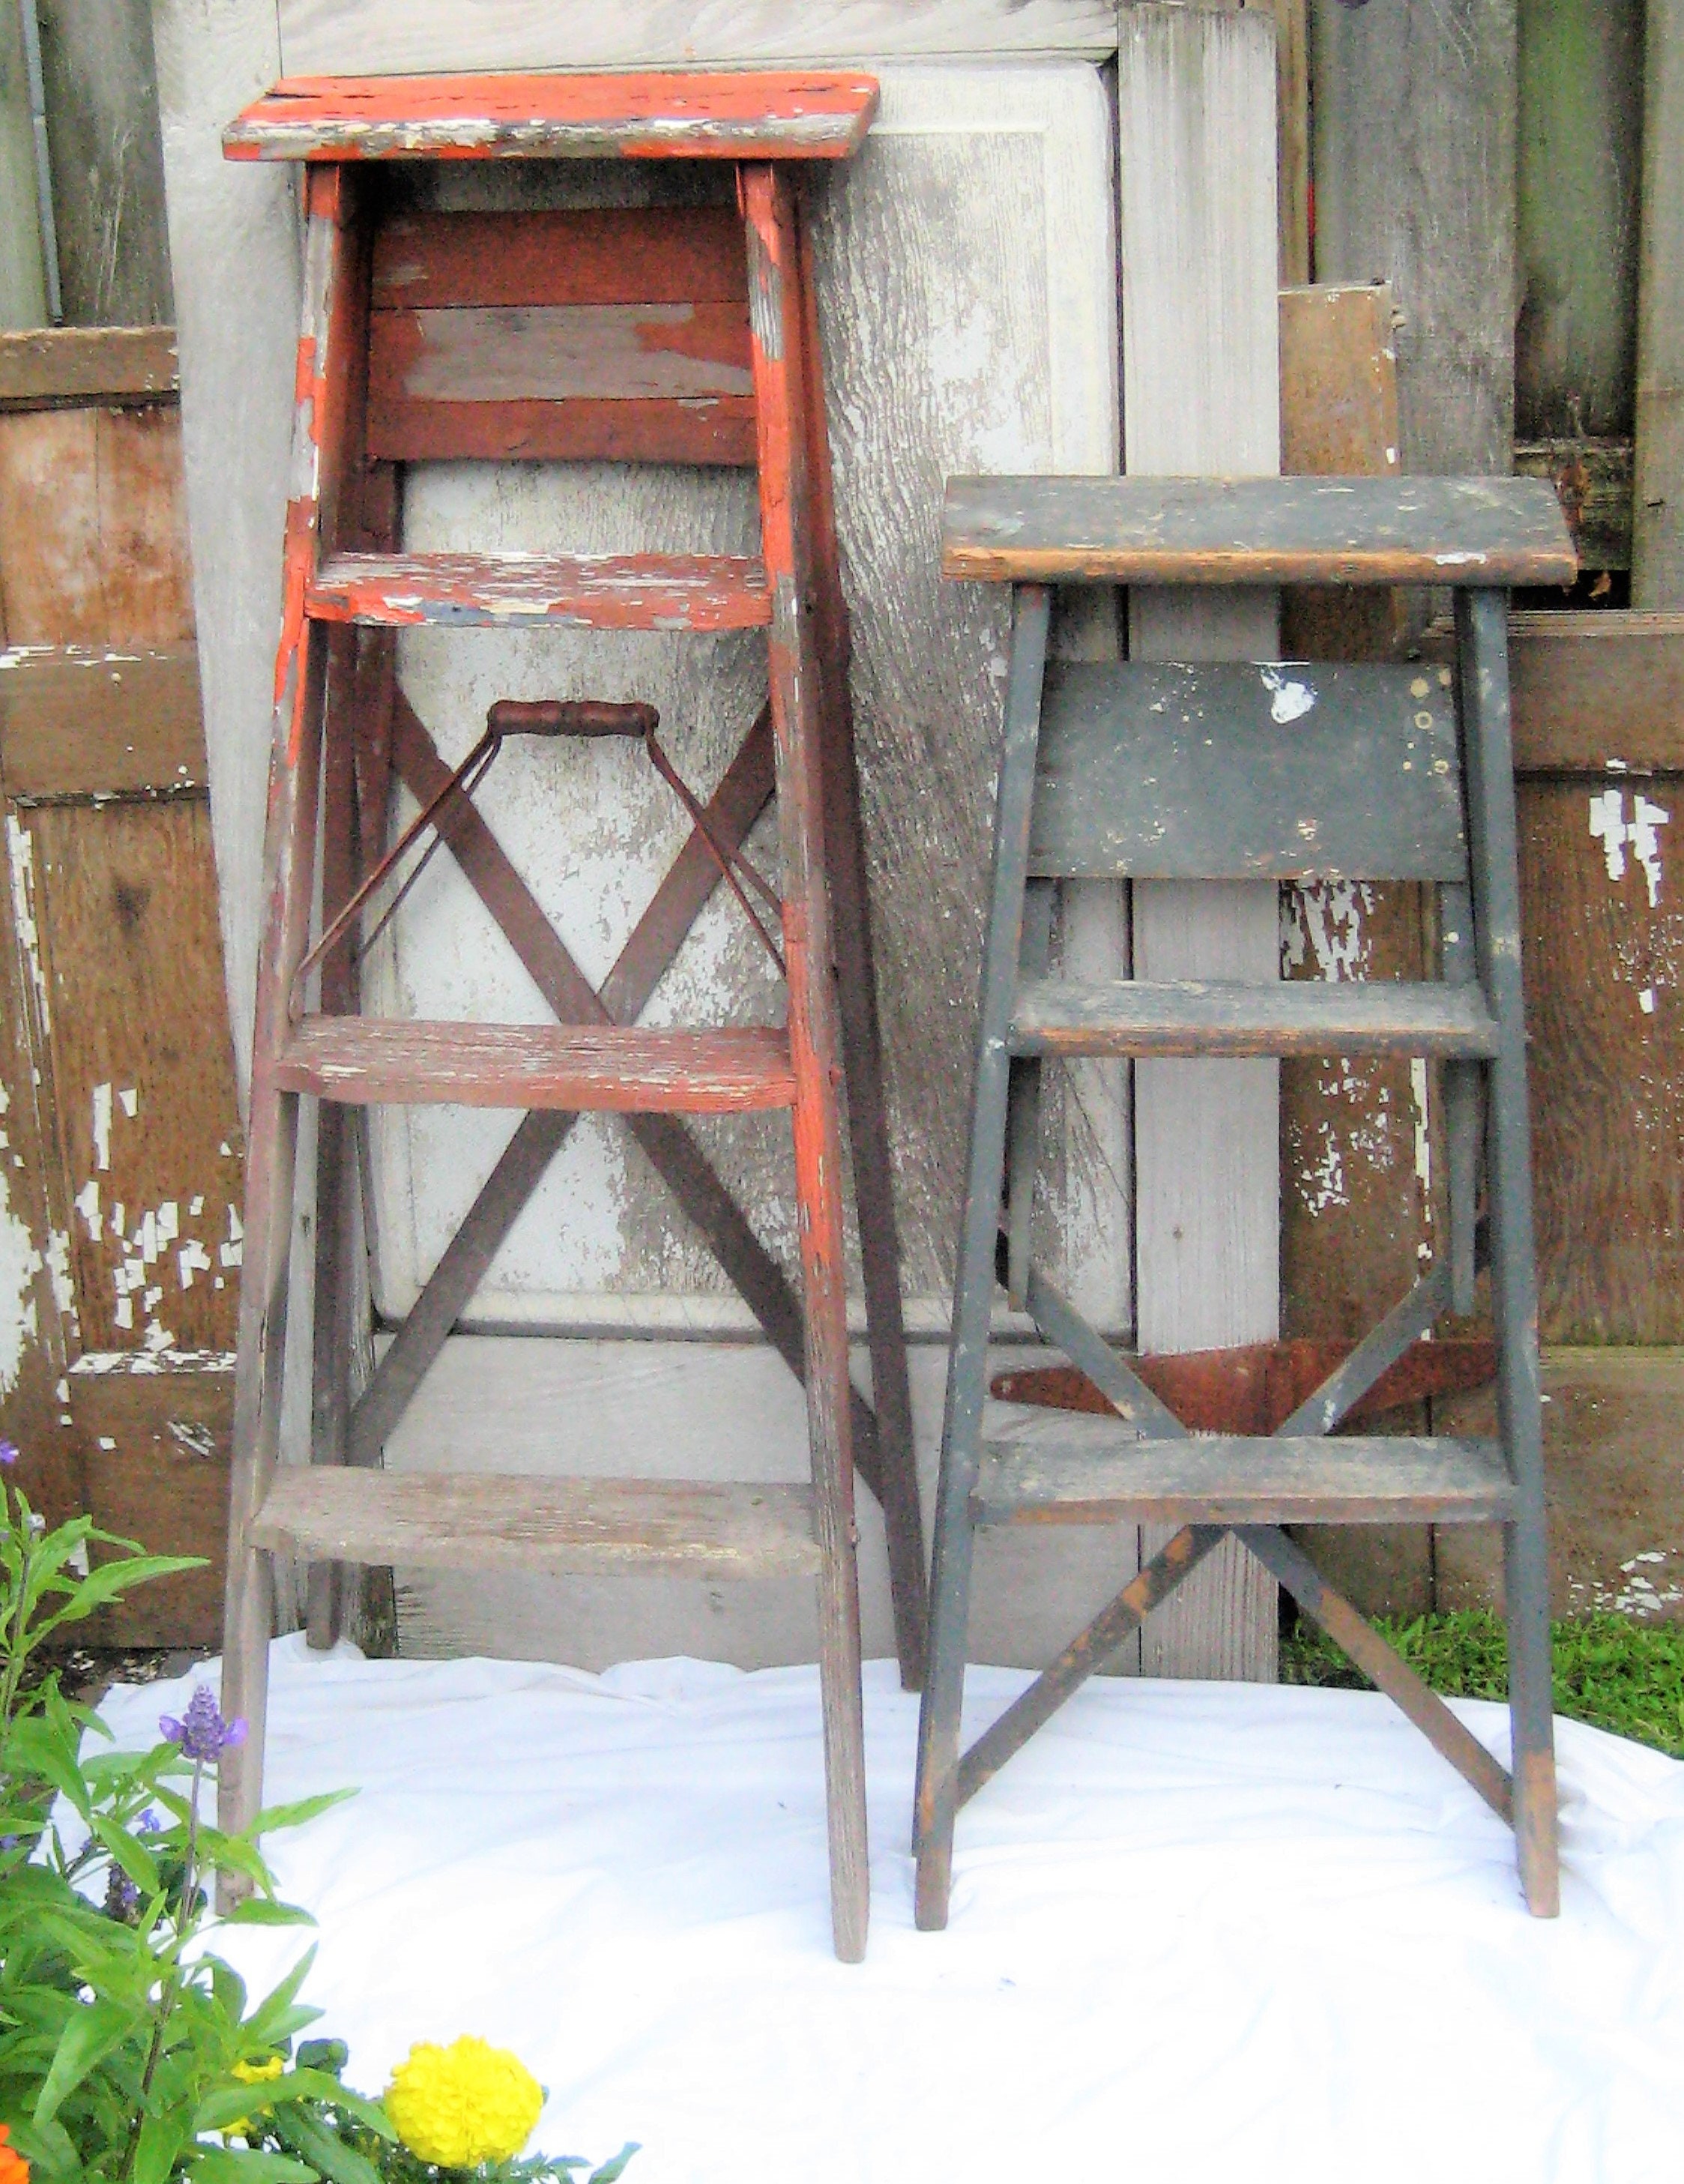 Old vintage wooden step ladder with paint splatters, display